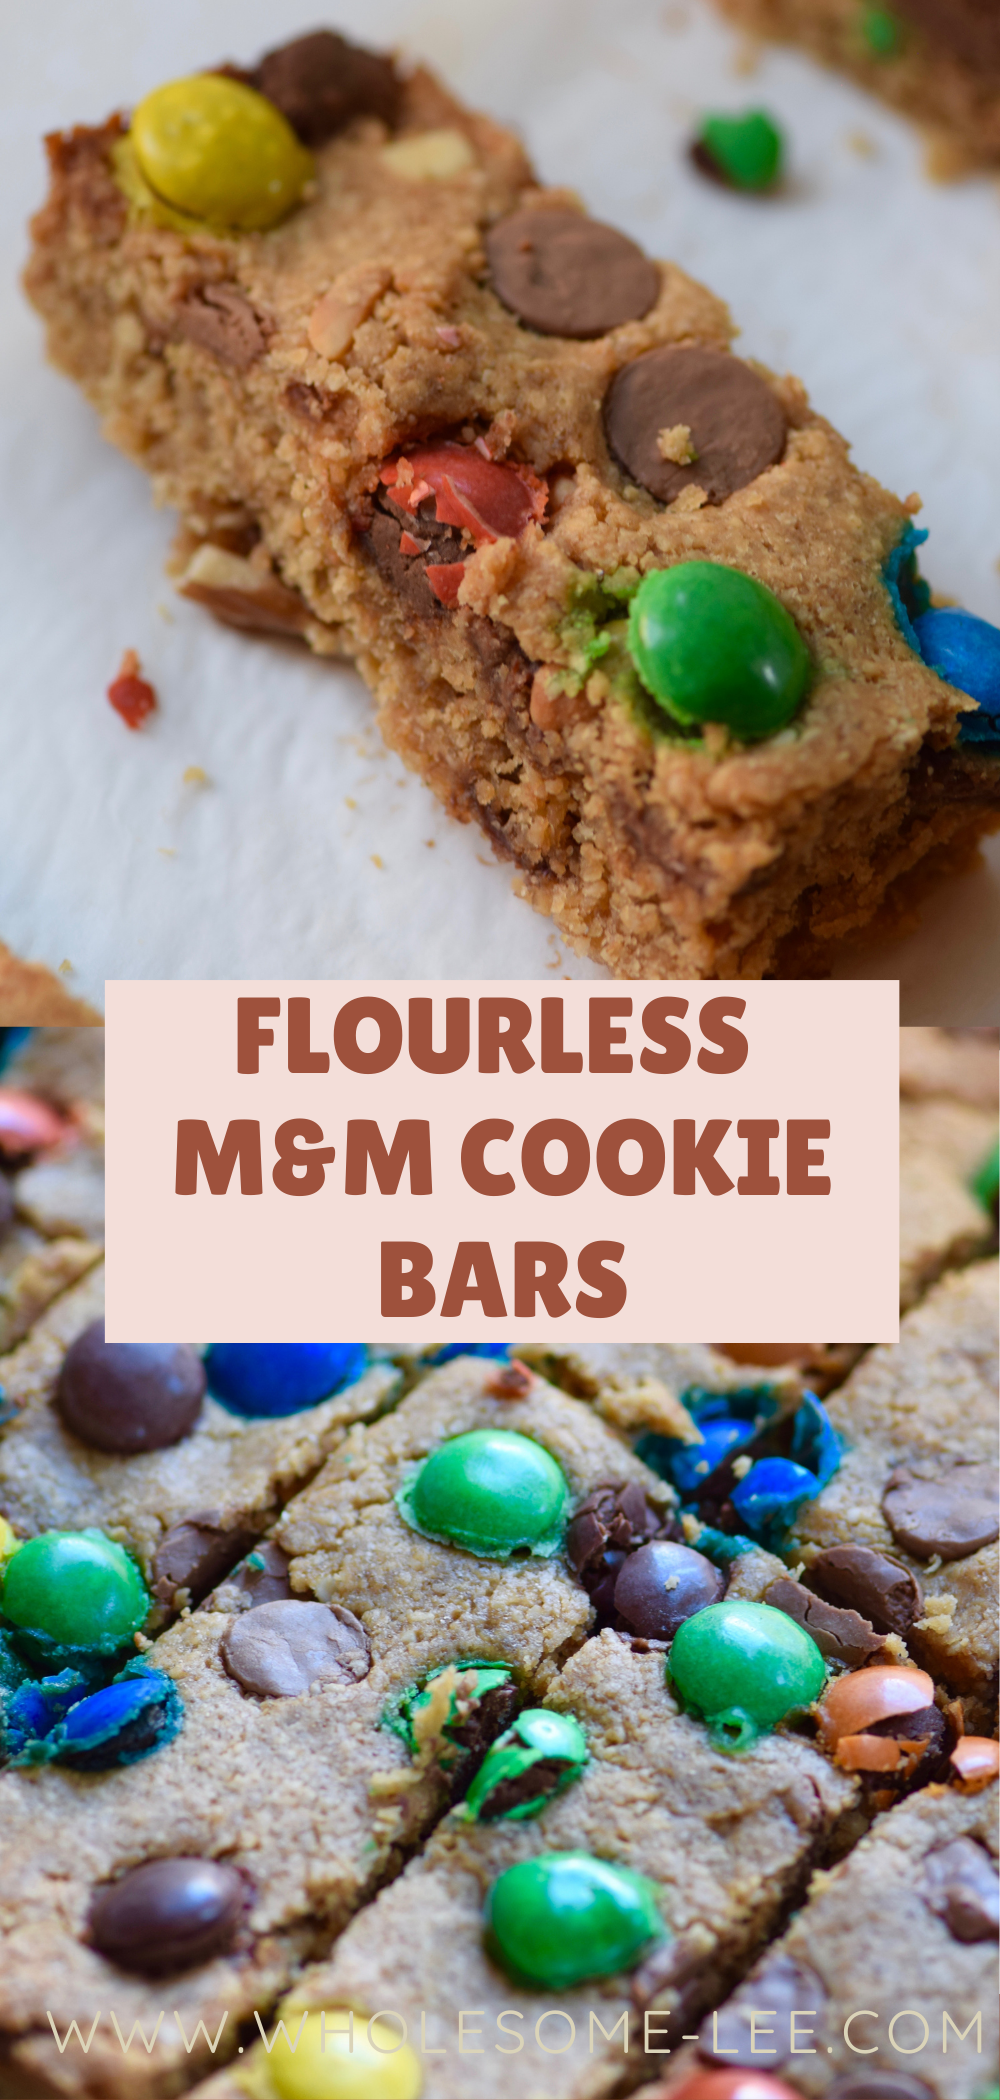 Flourless M&M cookie bars